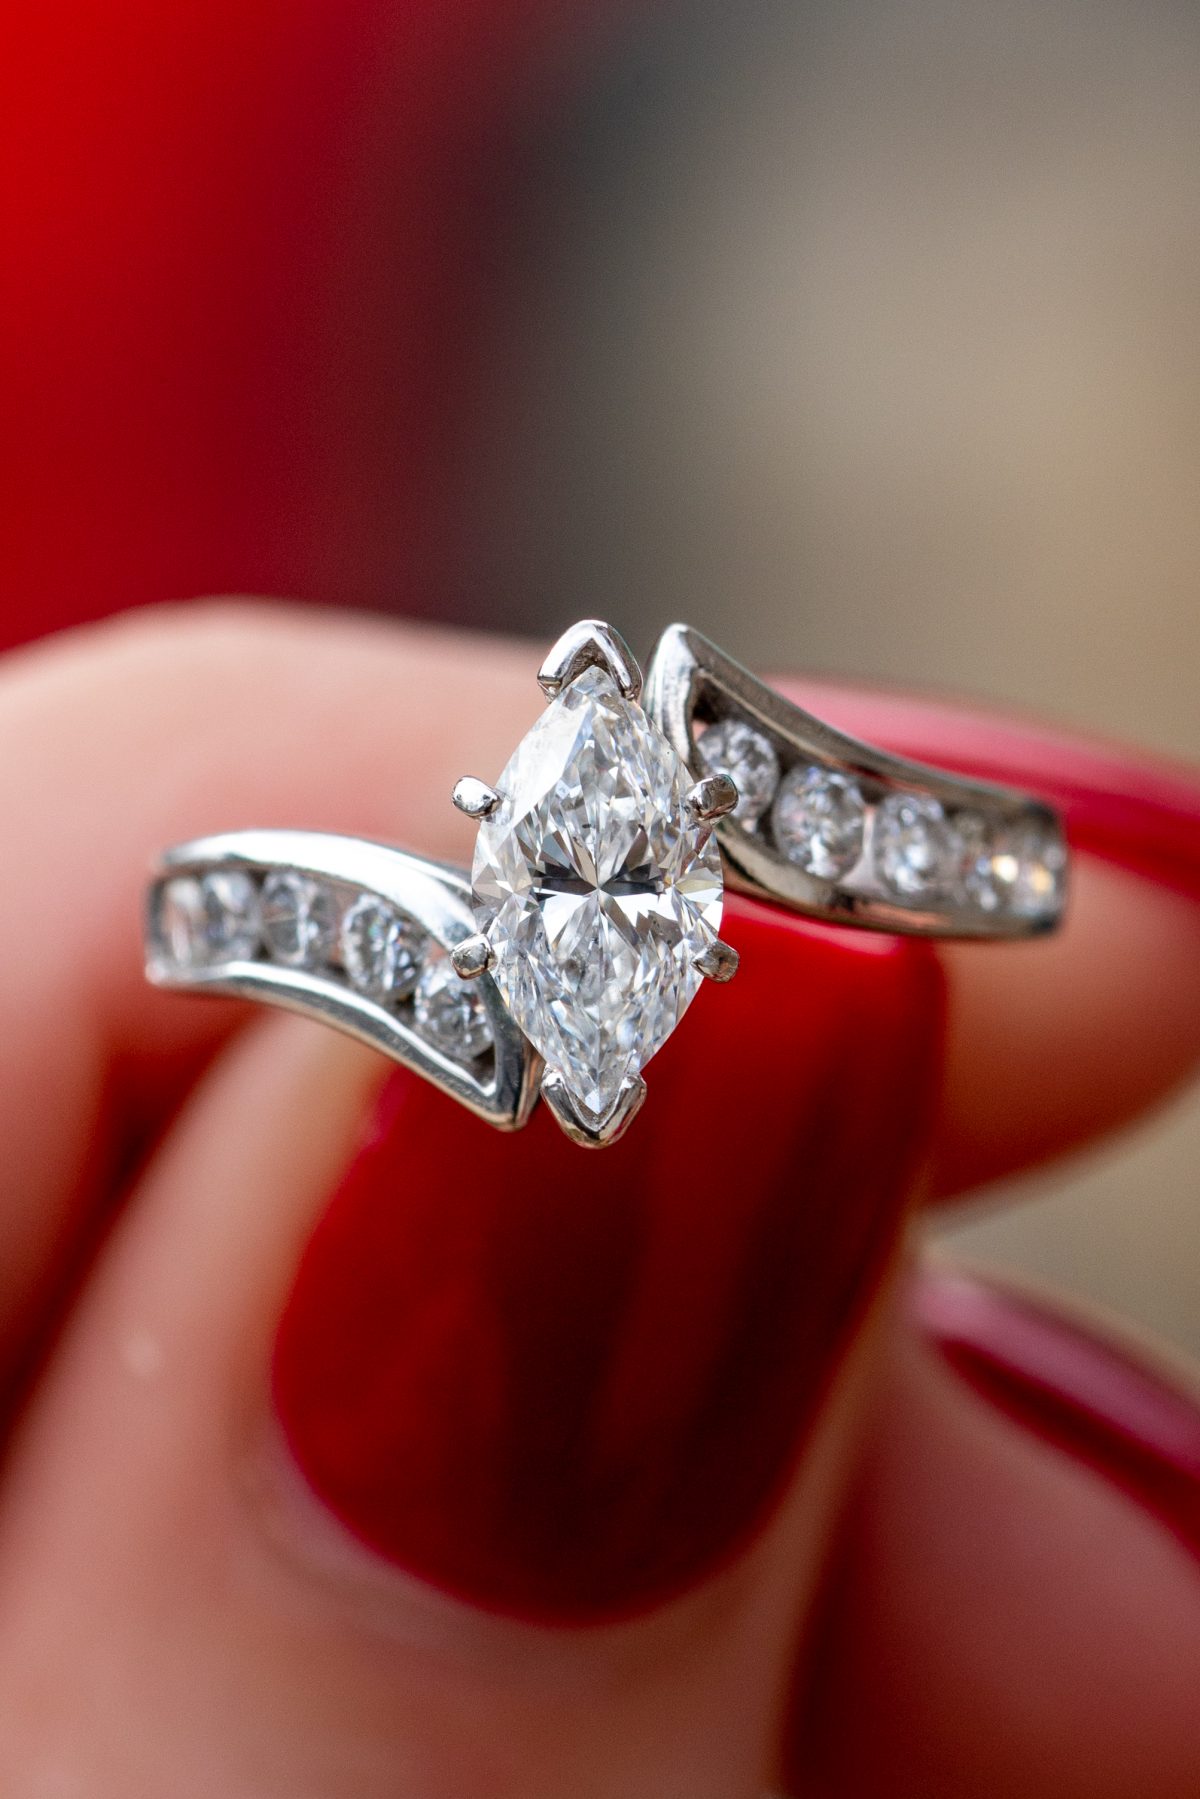 Marquise-shaped diamond rings